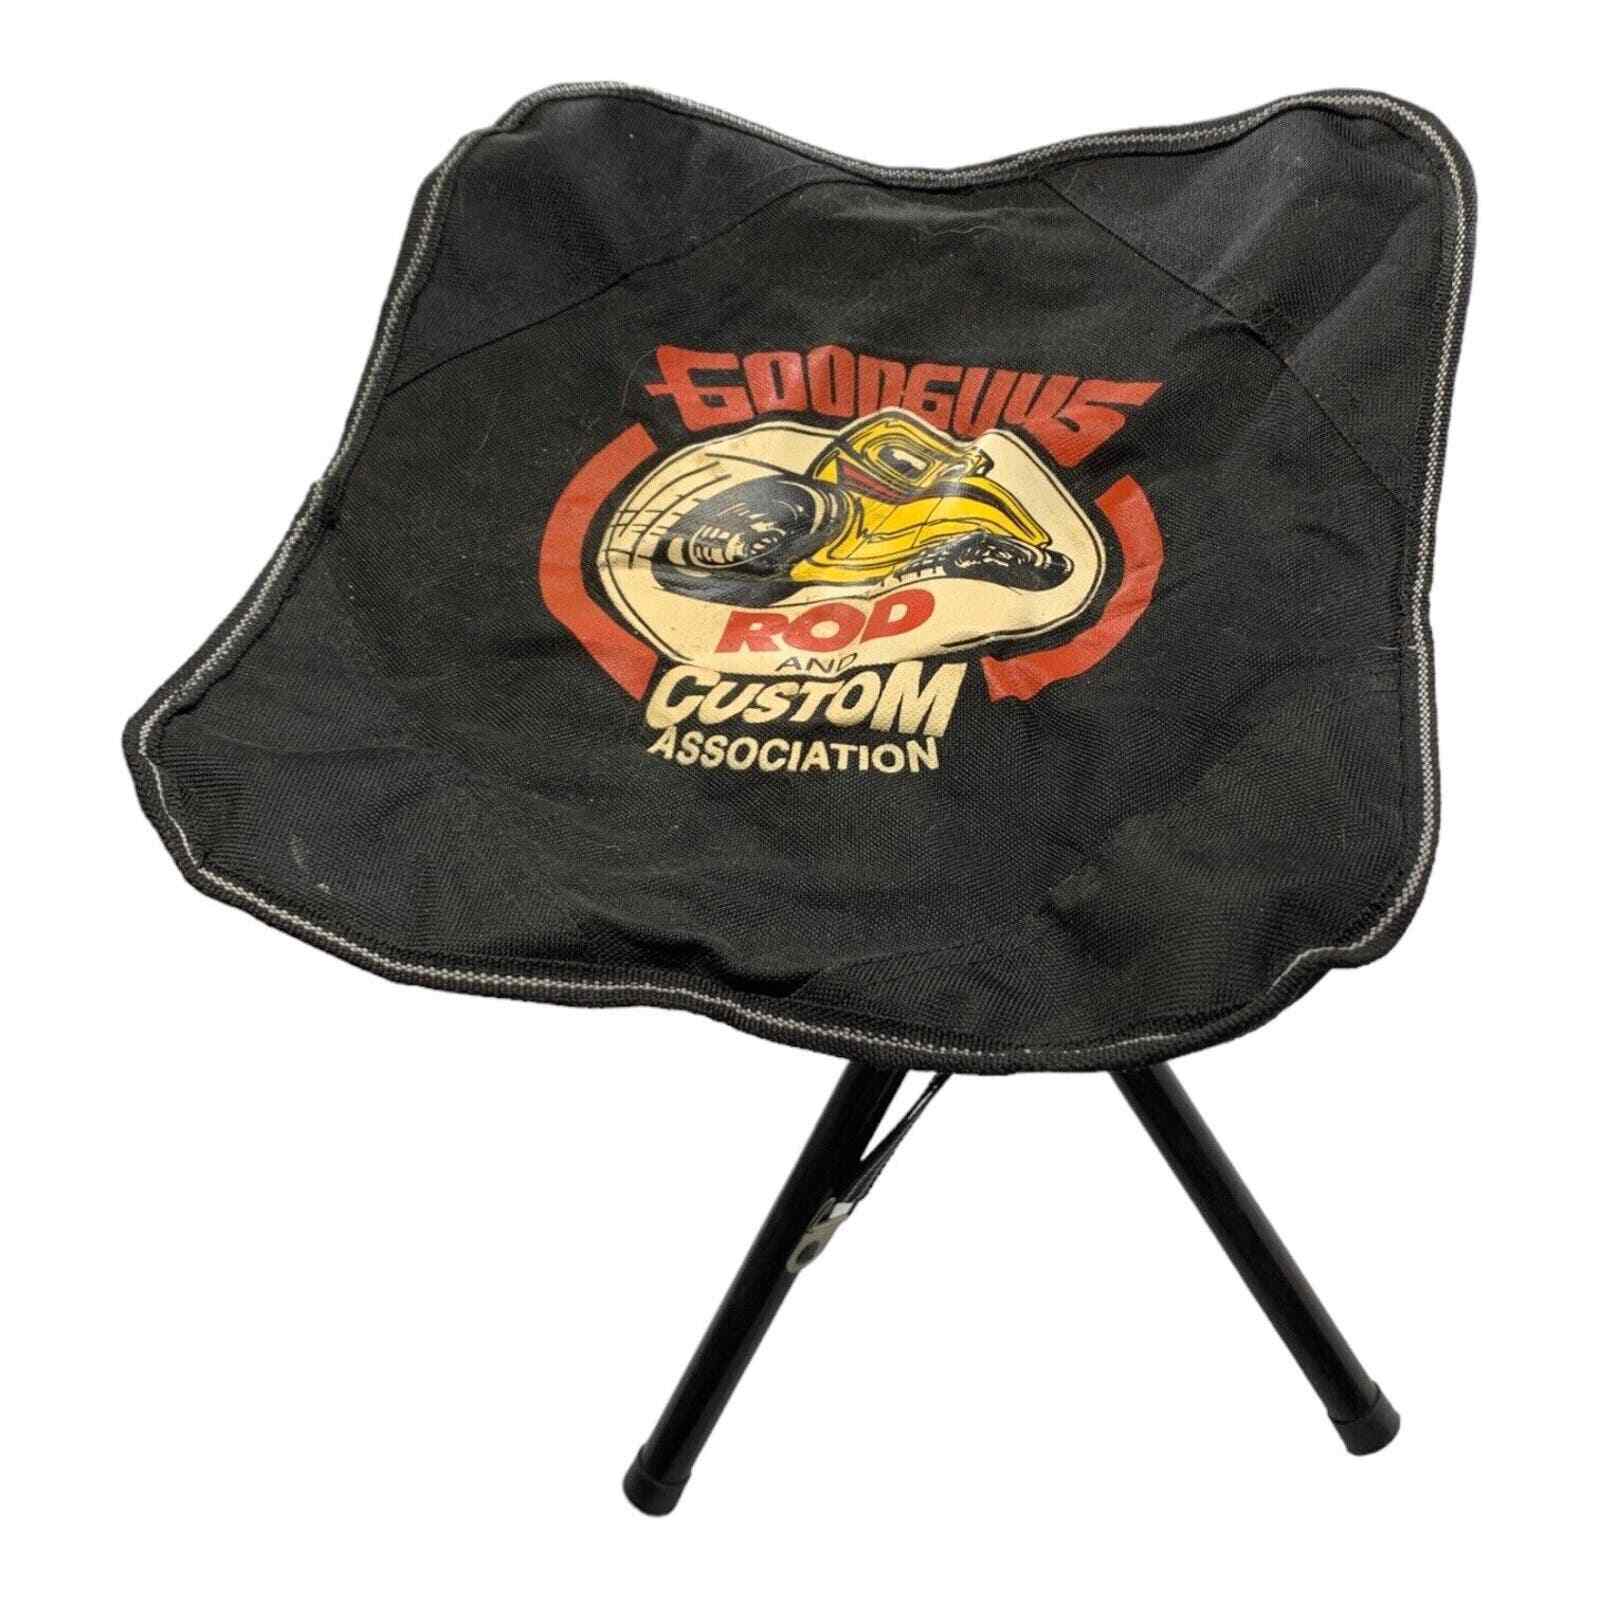 GoodGuys Rod Custom Associations member Promotional Stool Chair pop Seat shops